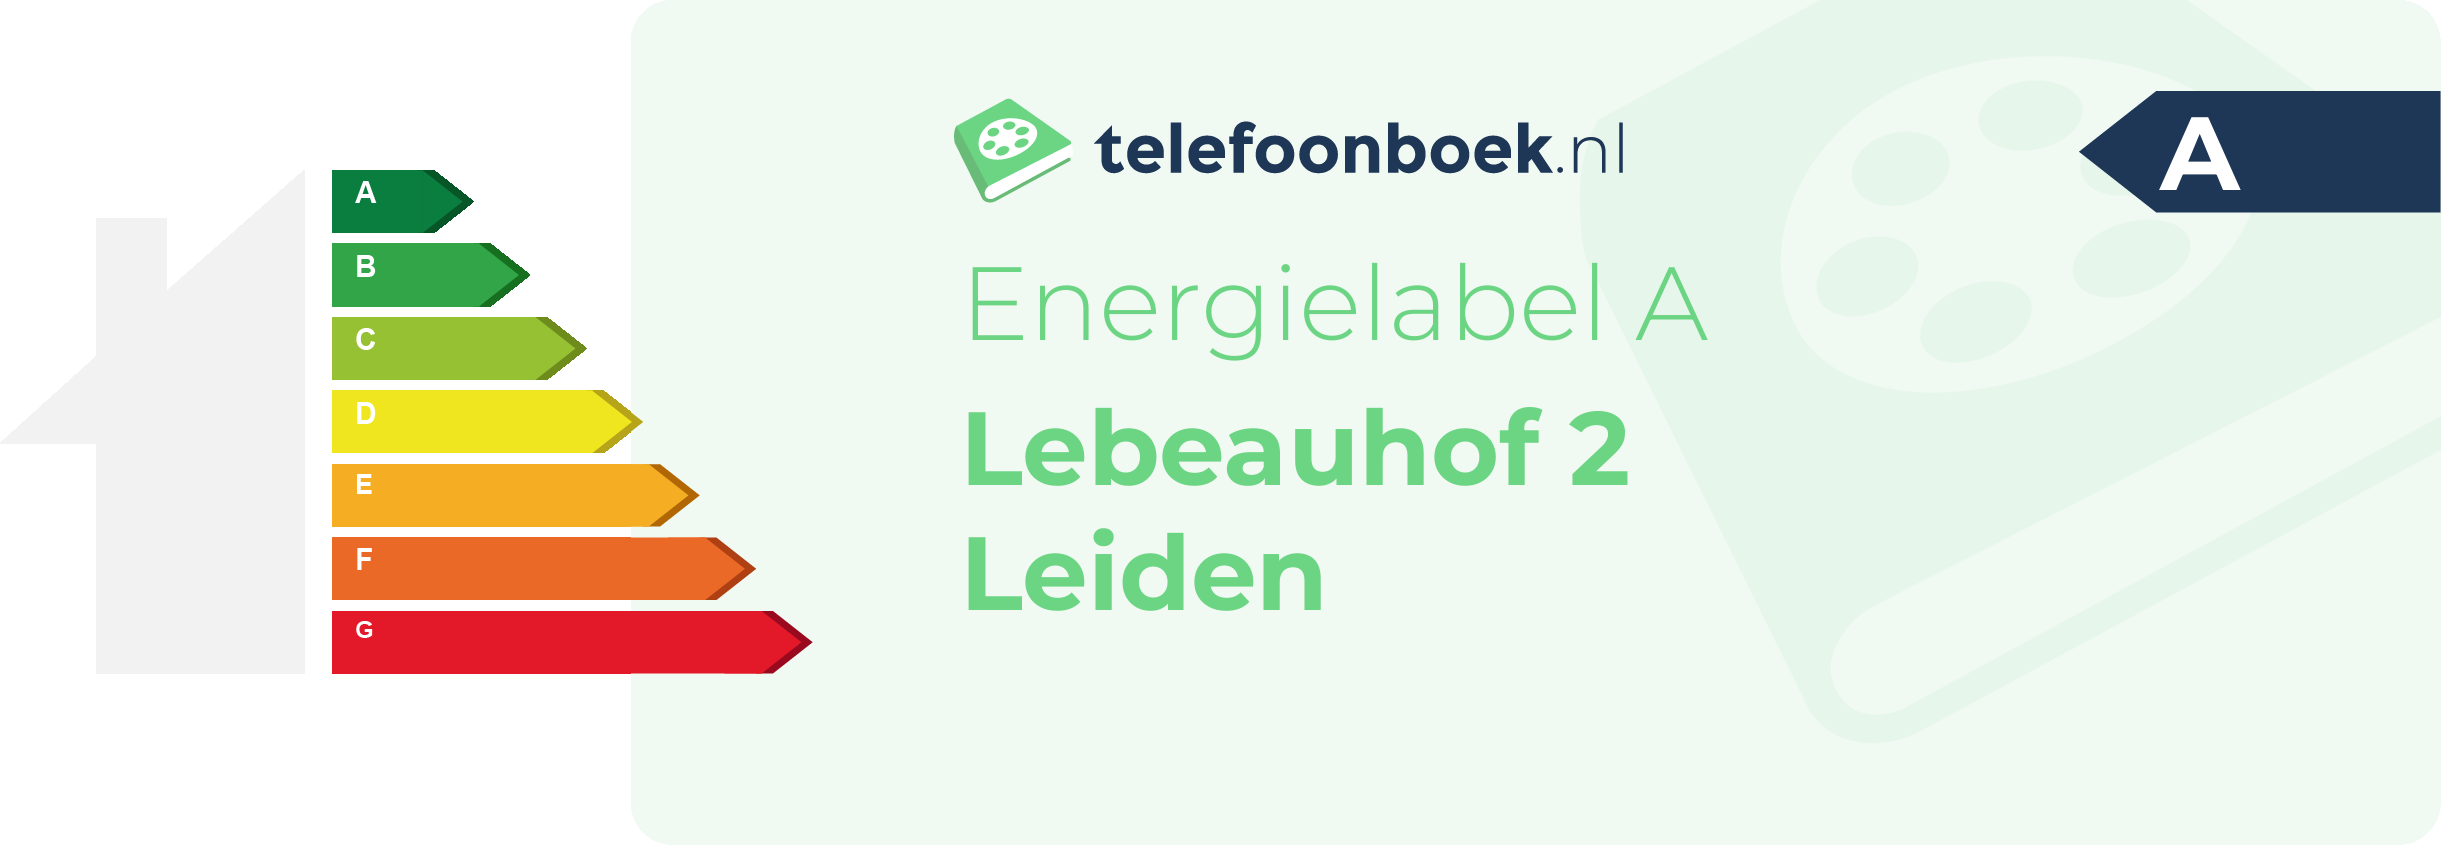 Energielabel Lebeauhof 2 Leiden